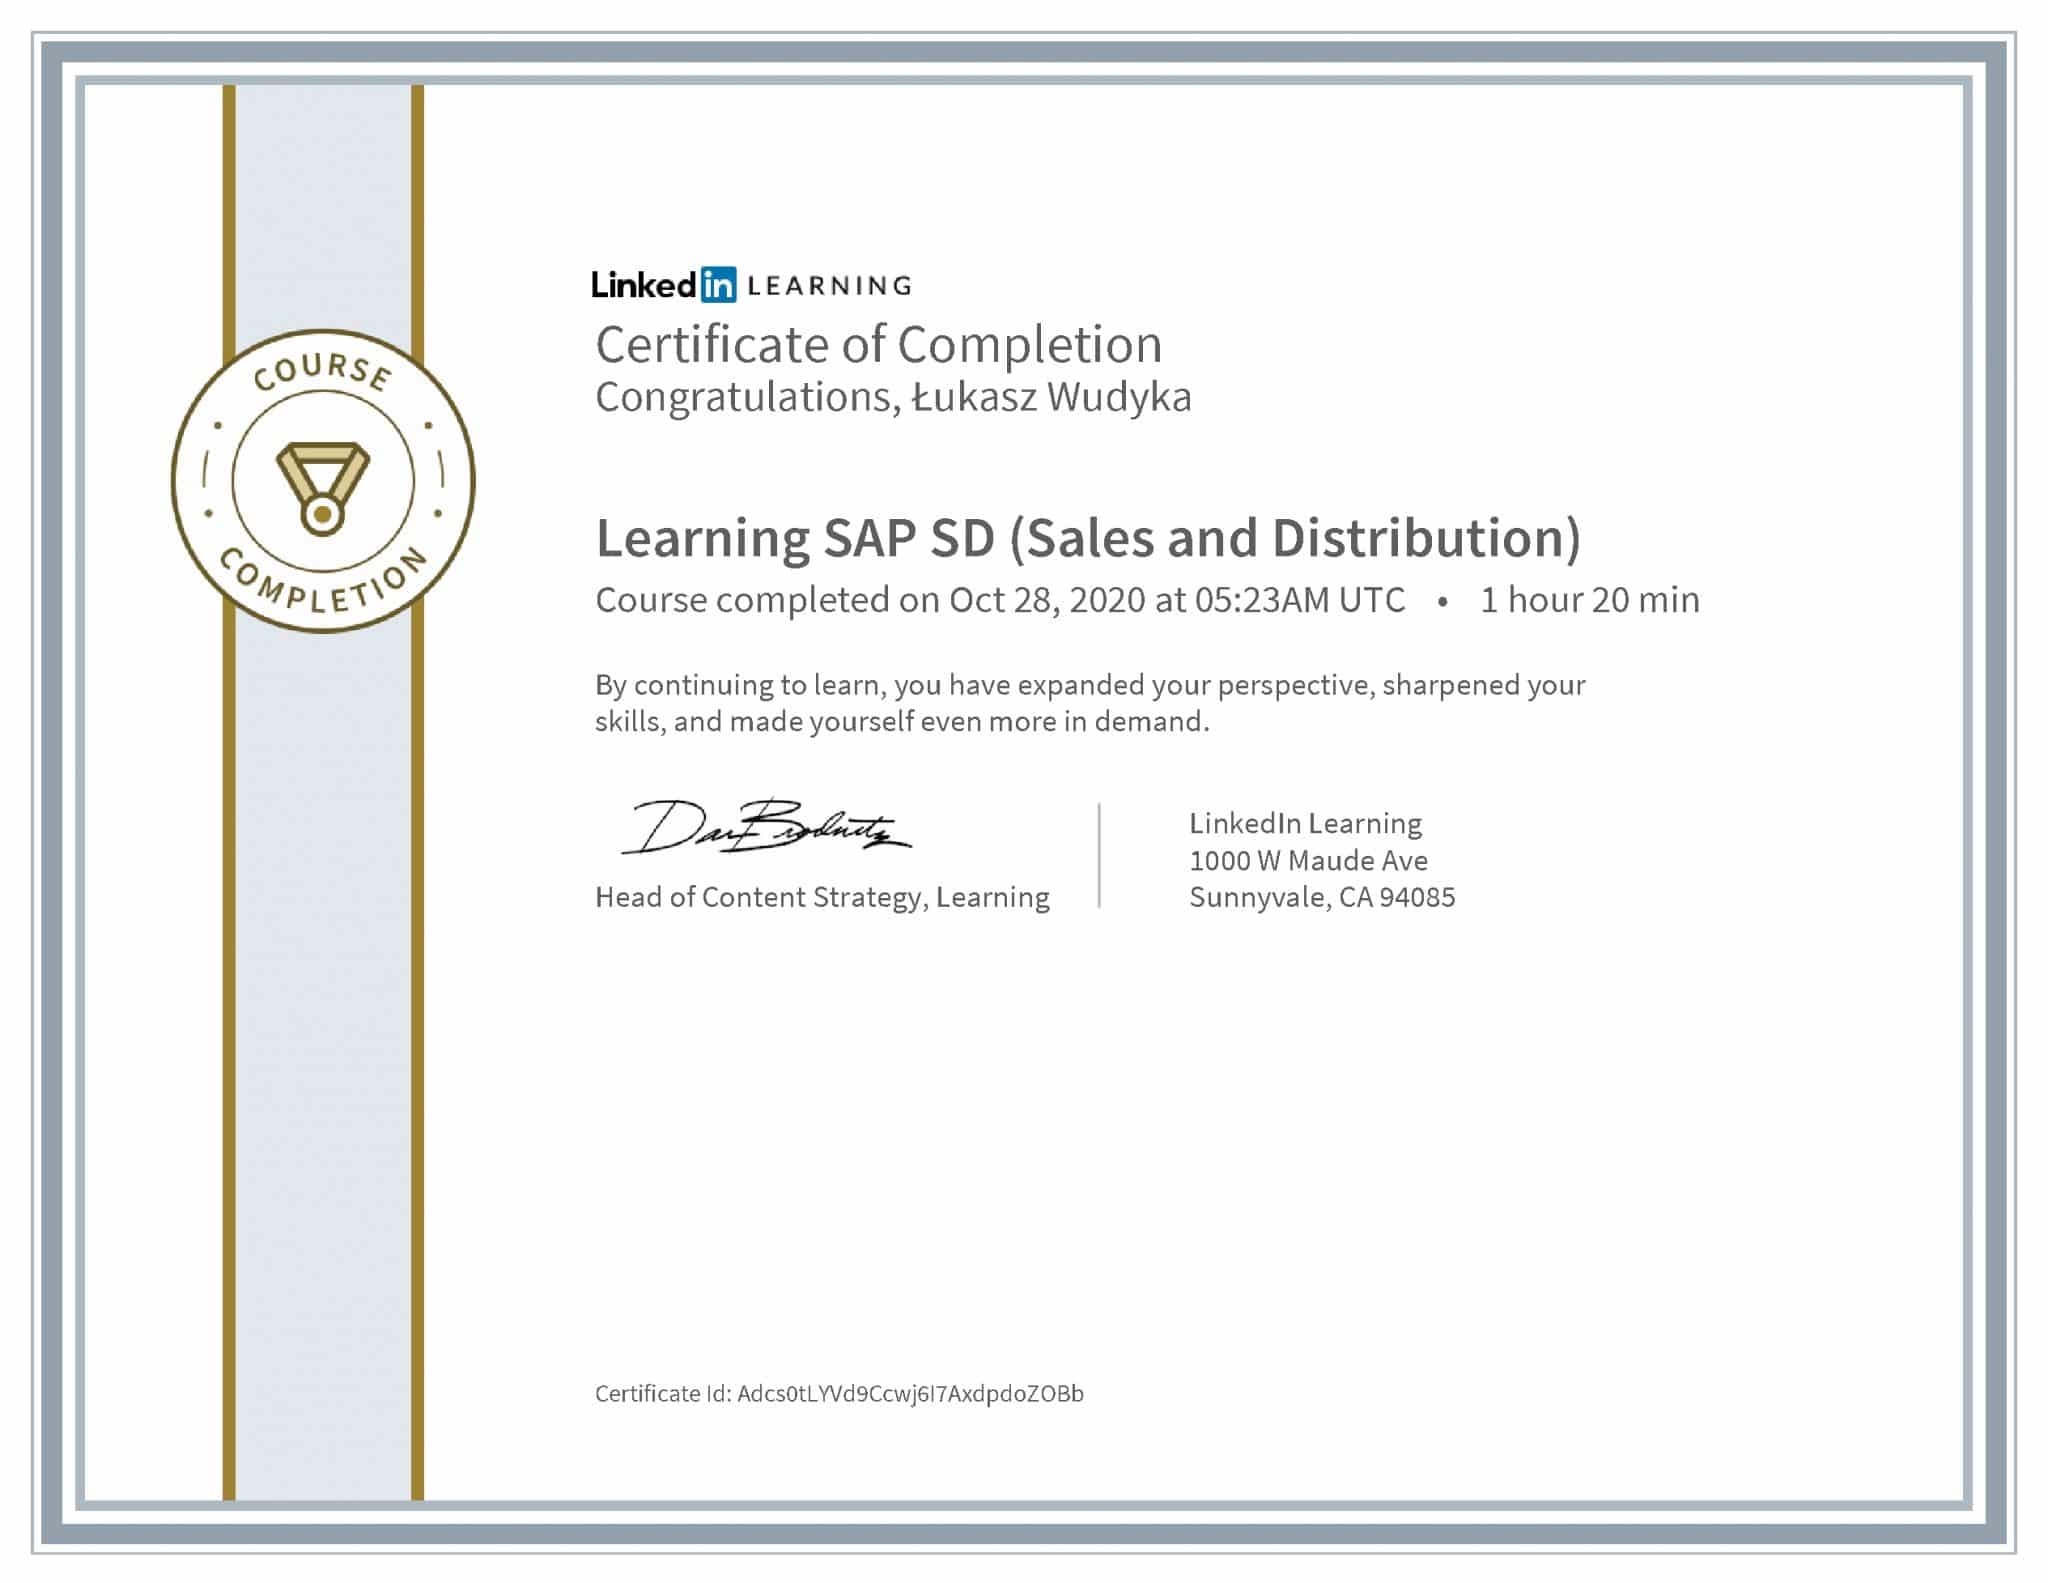 Łukasz Wudyka certyfikat LinkedIn Learning SAP SD (Sales and Distribution)